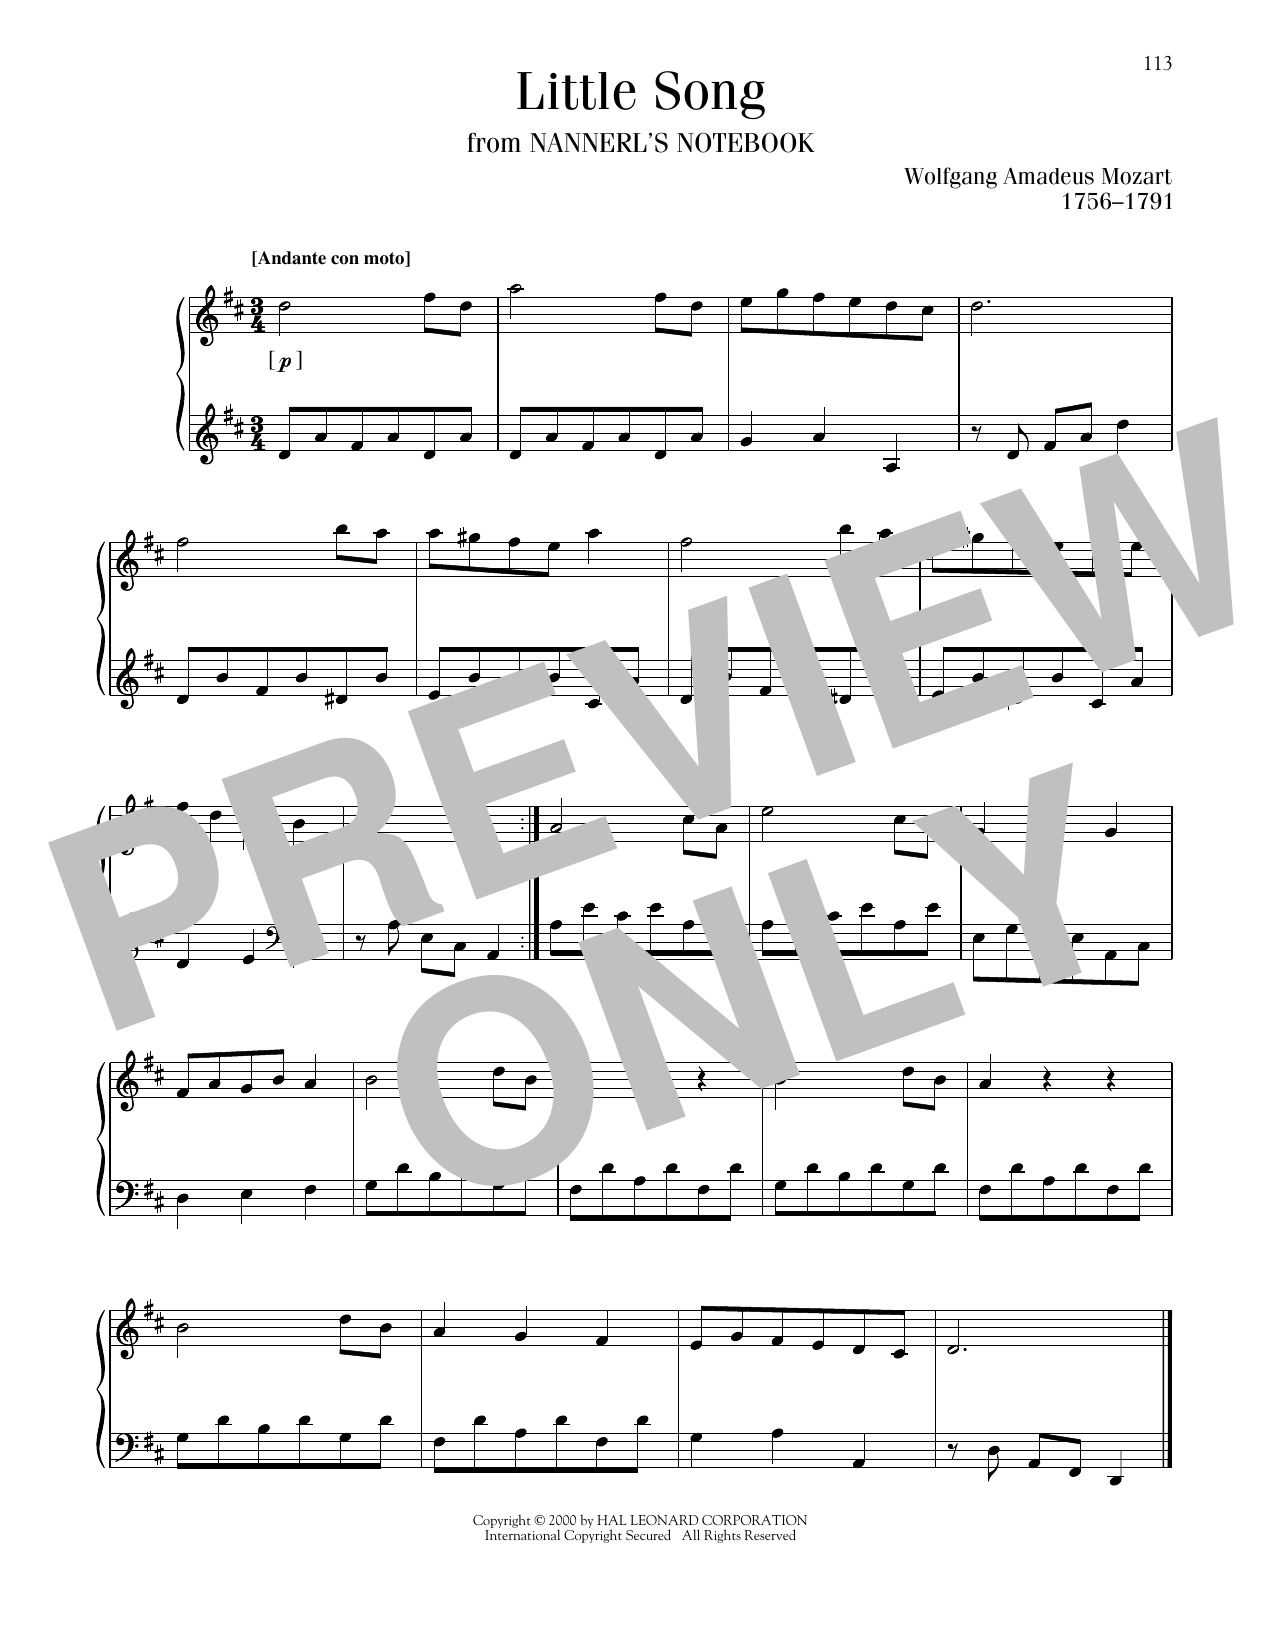 Wolfgang Amadeus Mozart Little Song sheet music notes printable PDF score